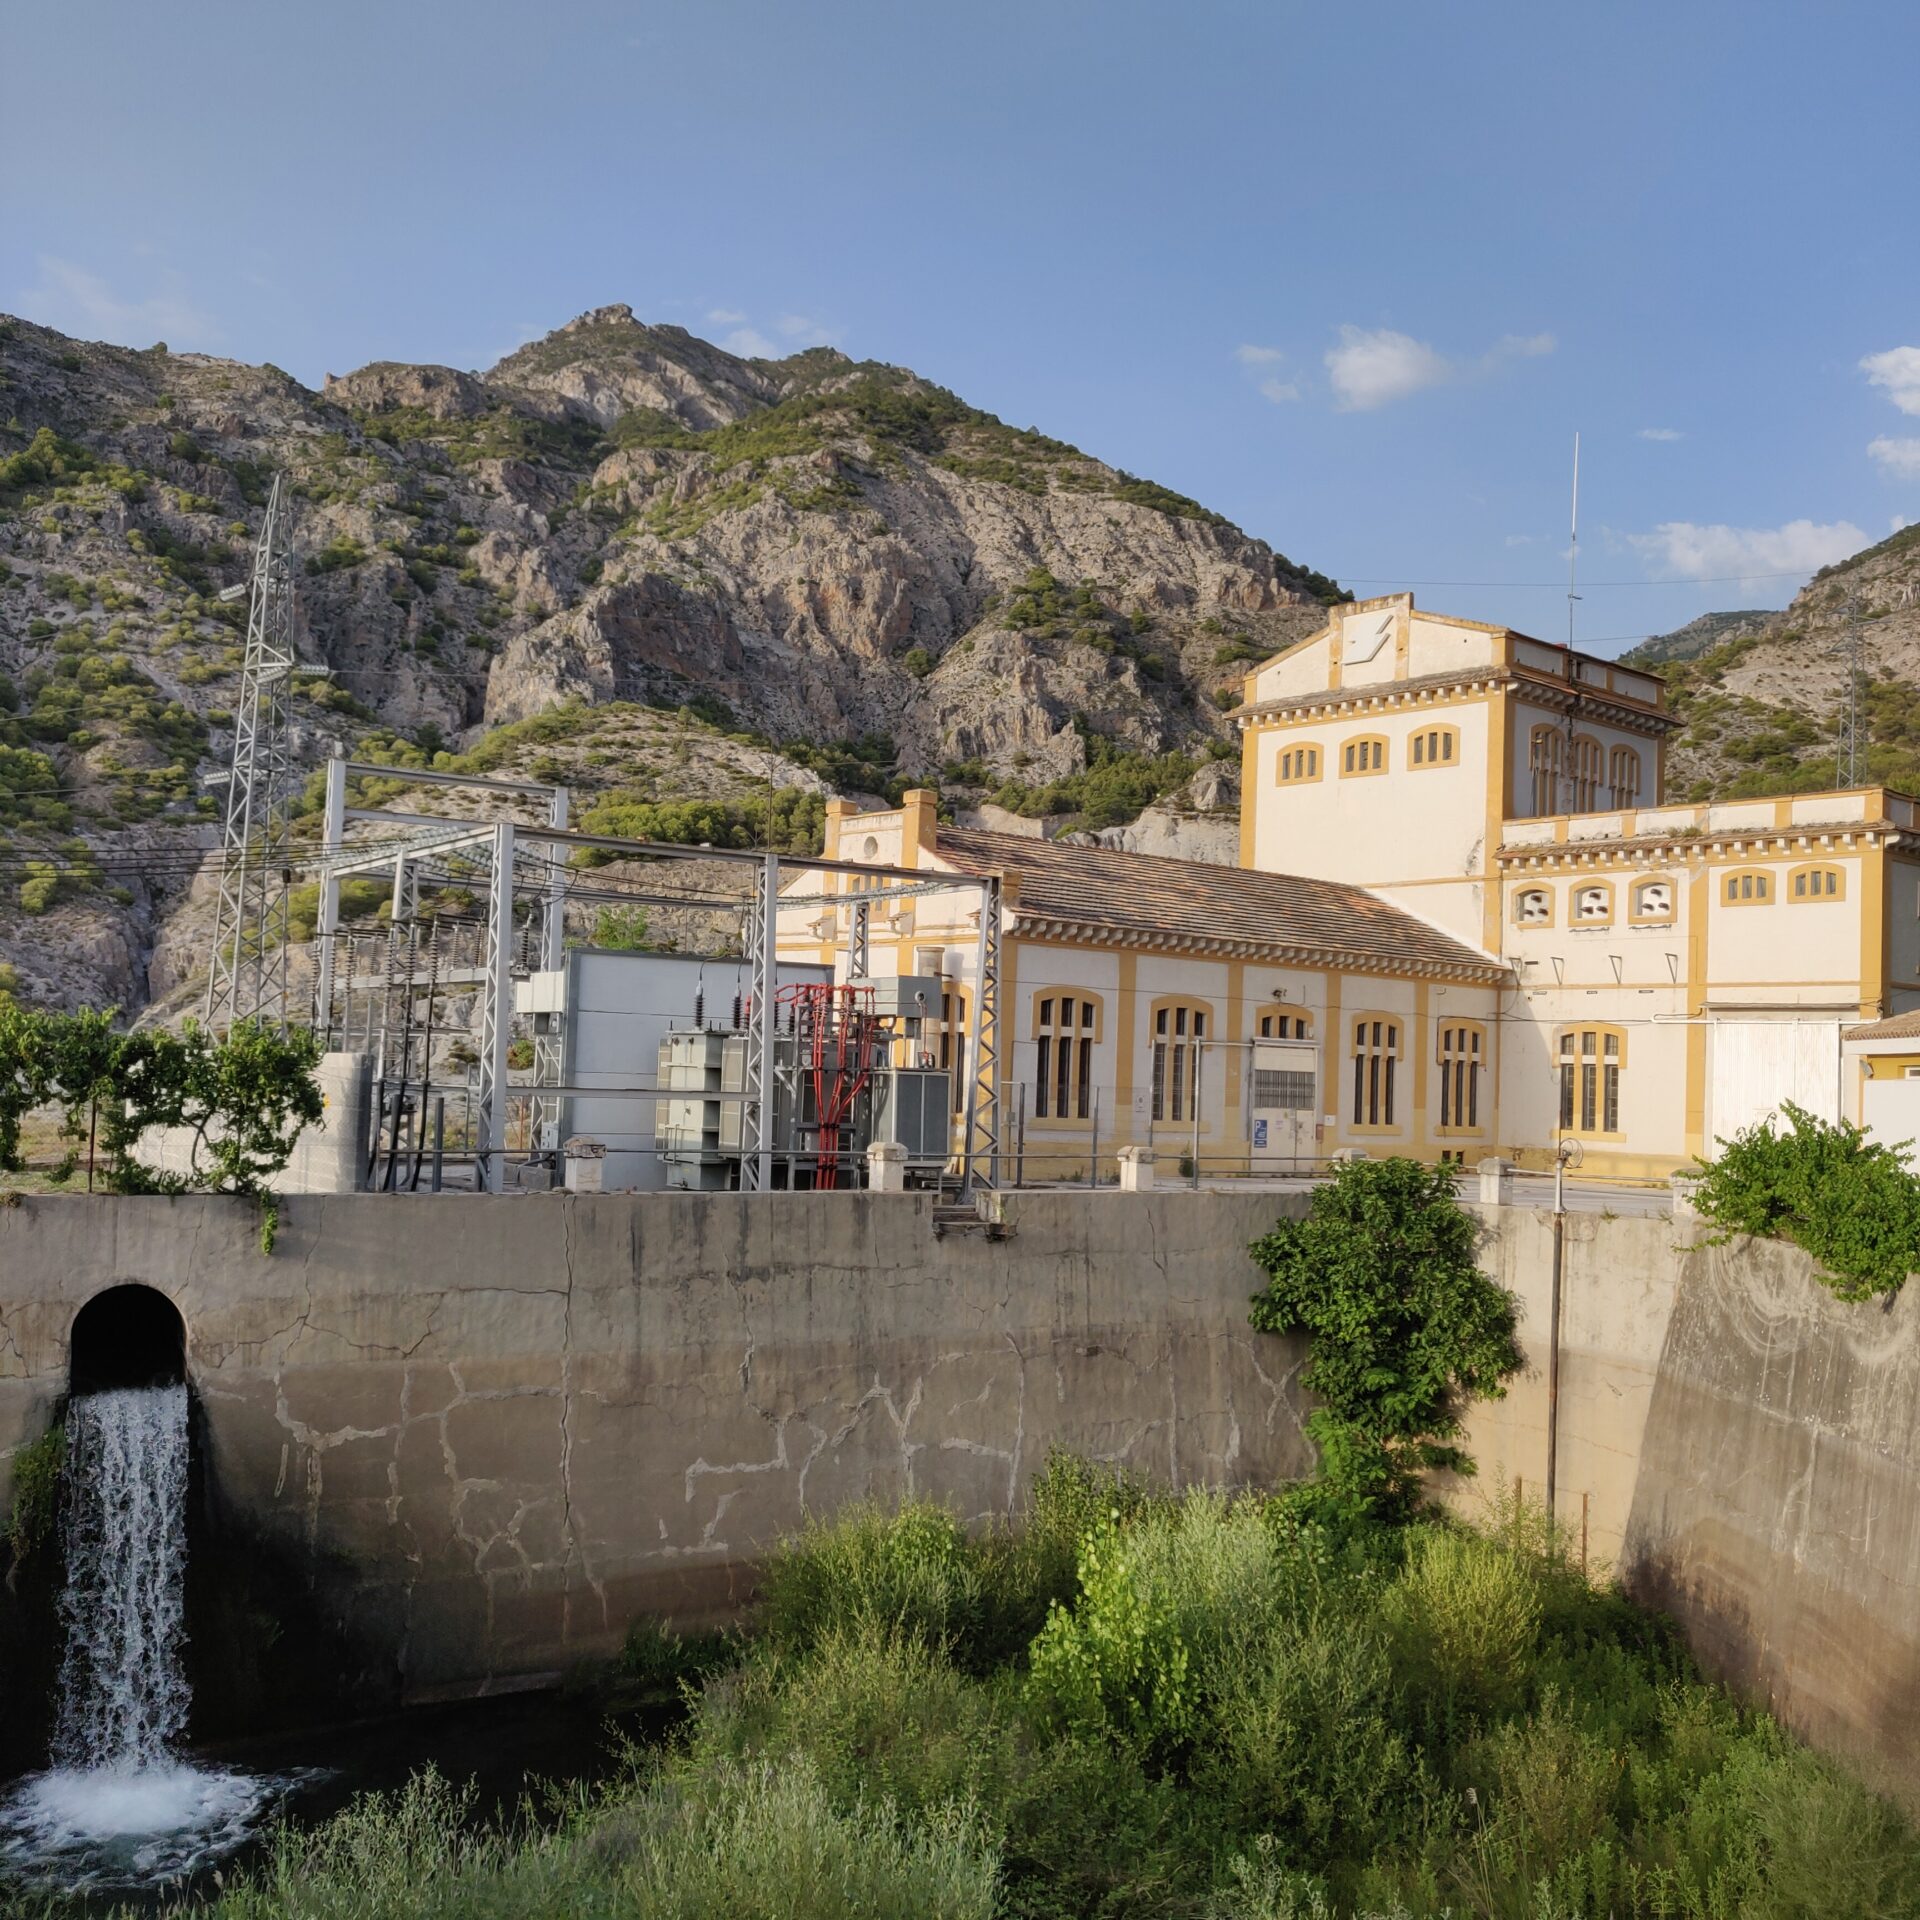 Central Hidroeléctrica "Salto de Dúrcal"